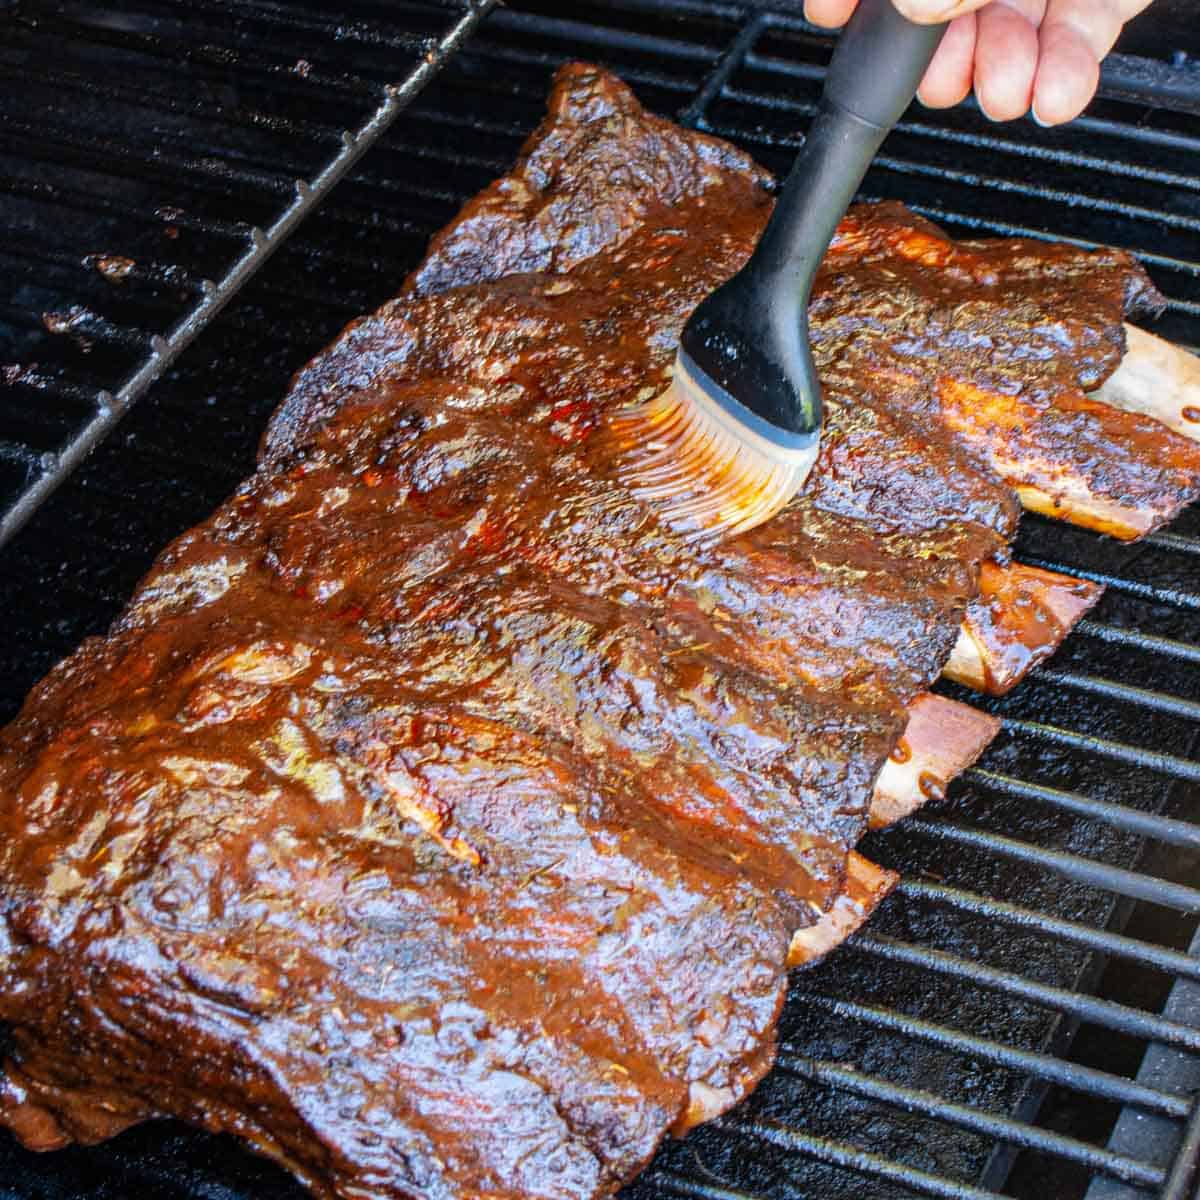 Applying sauce to a rack of beef ribs on the smoker.